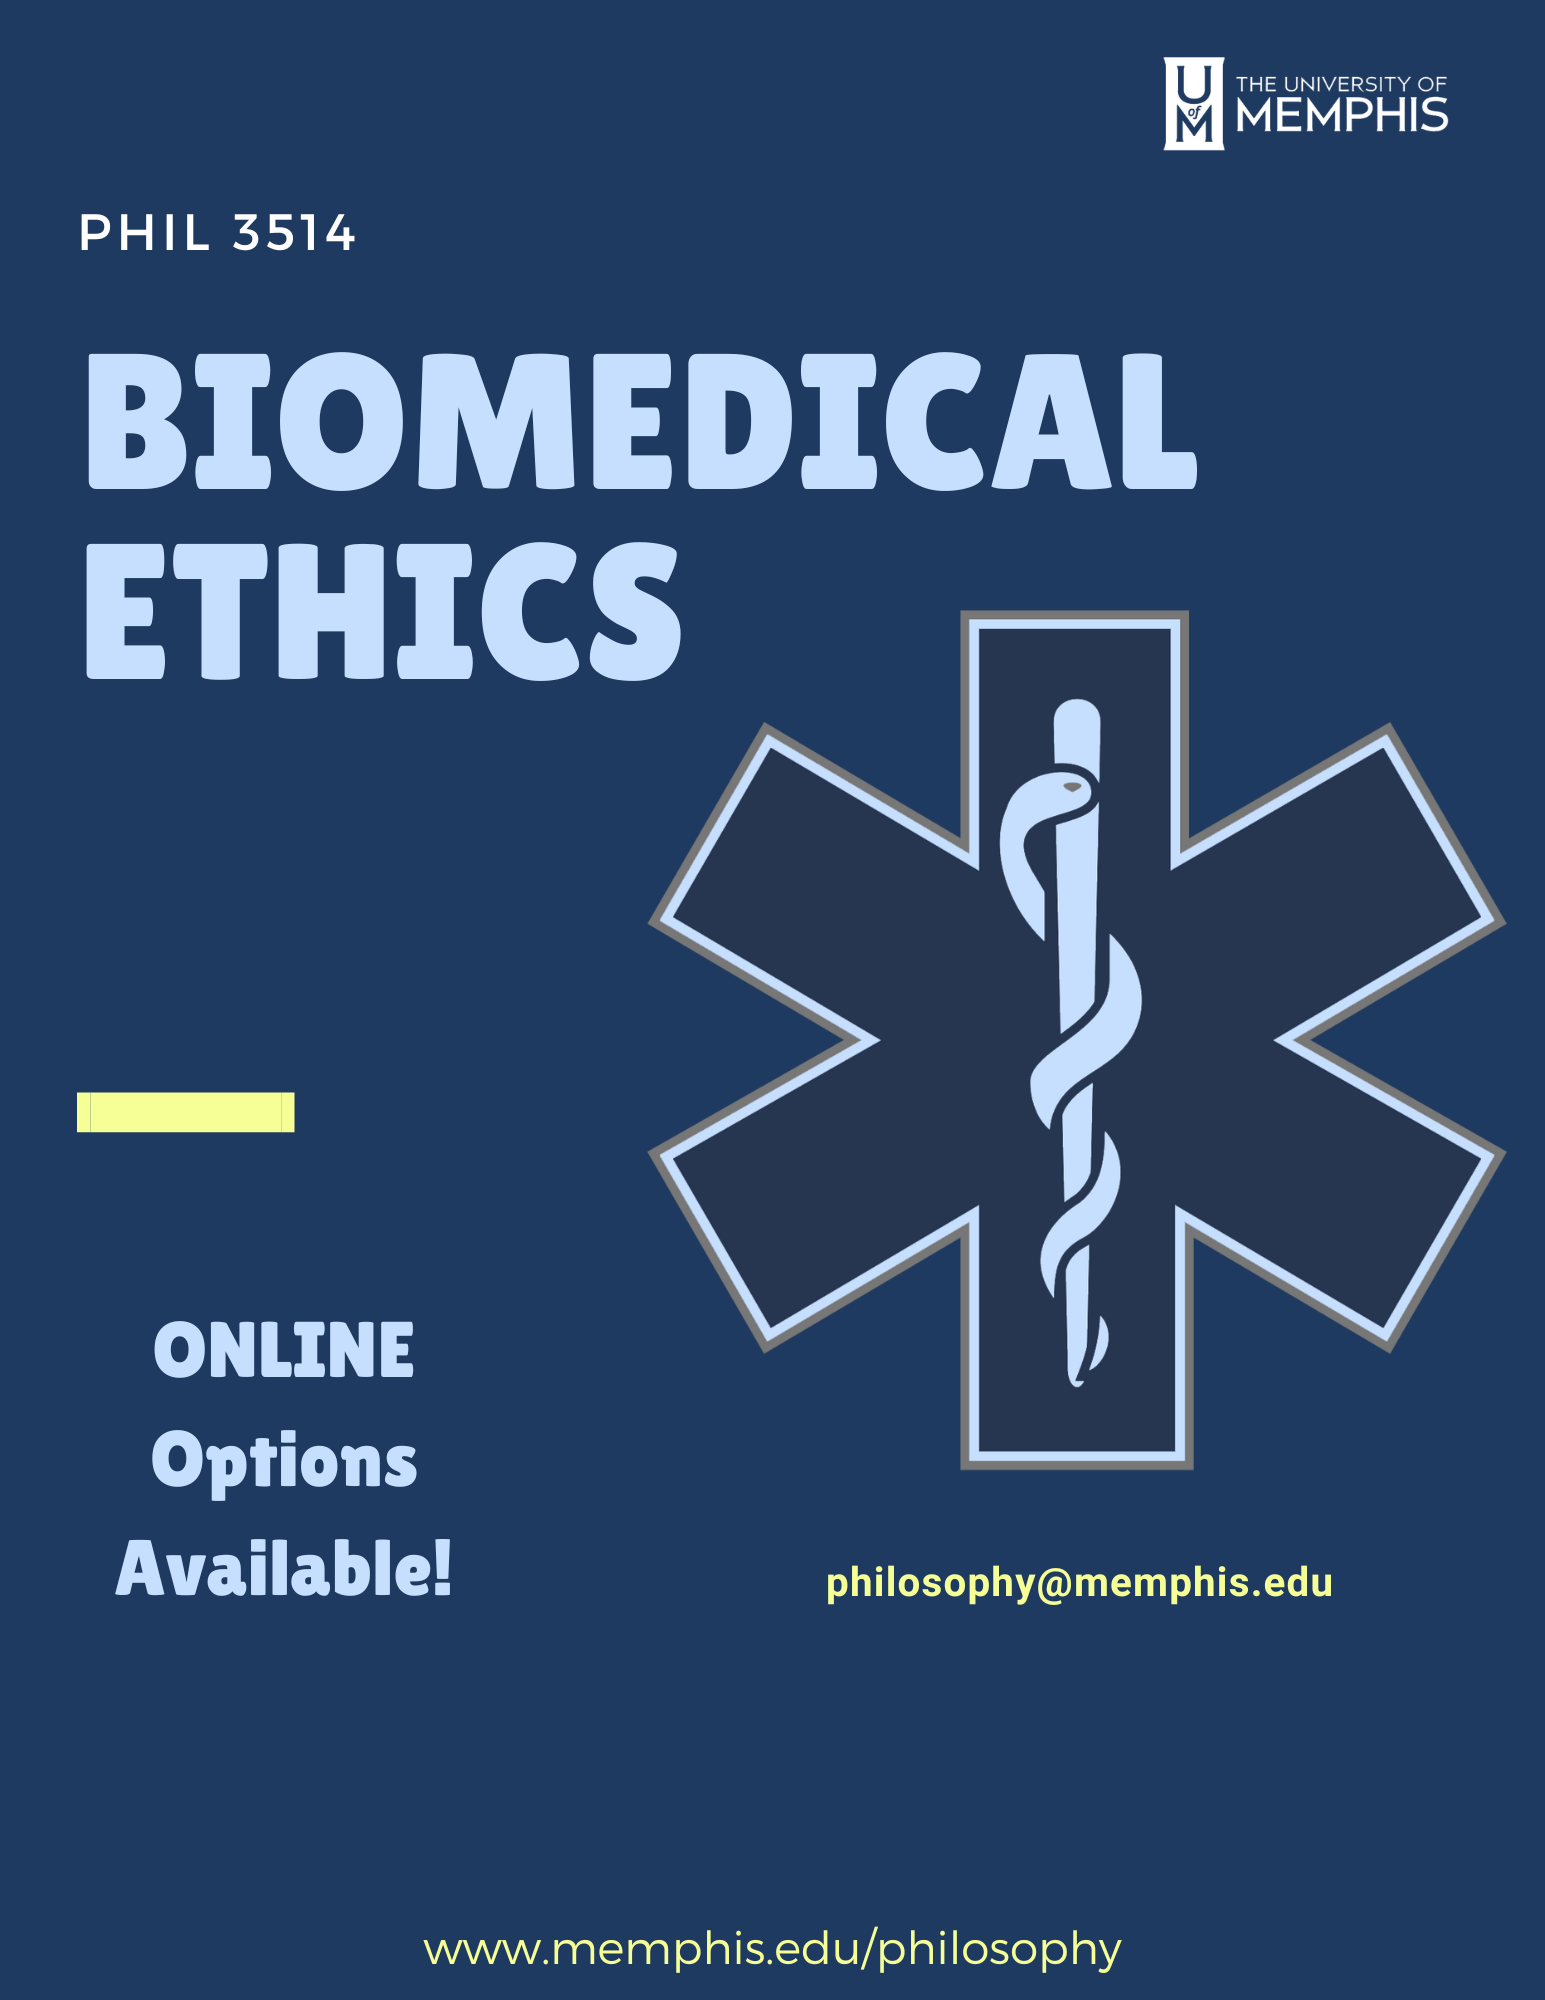 Biomedical Ethics Poster